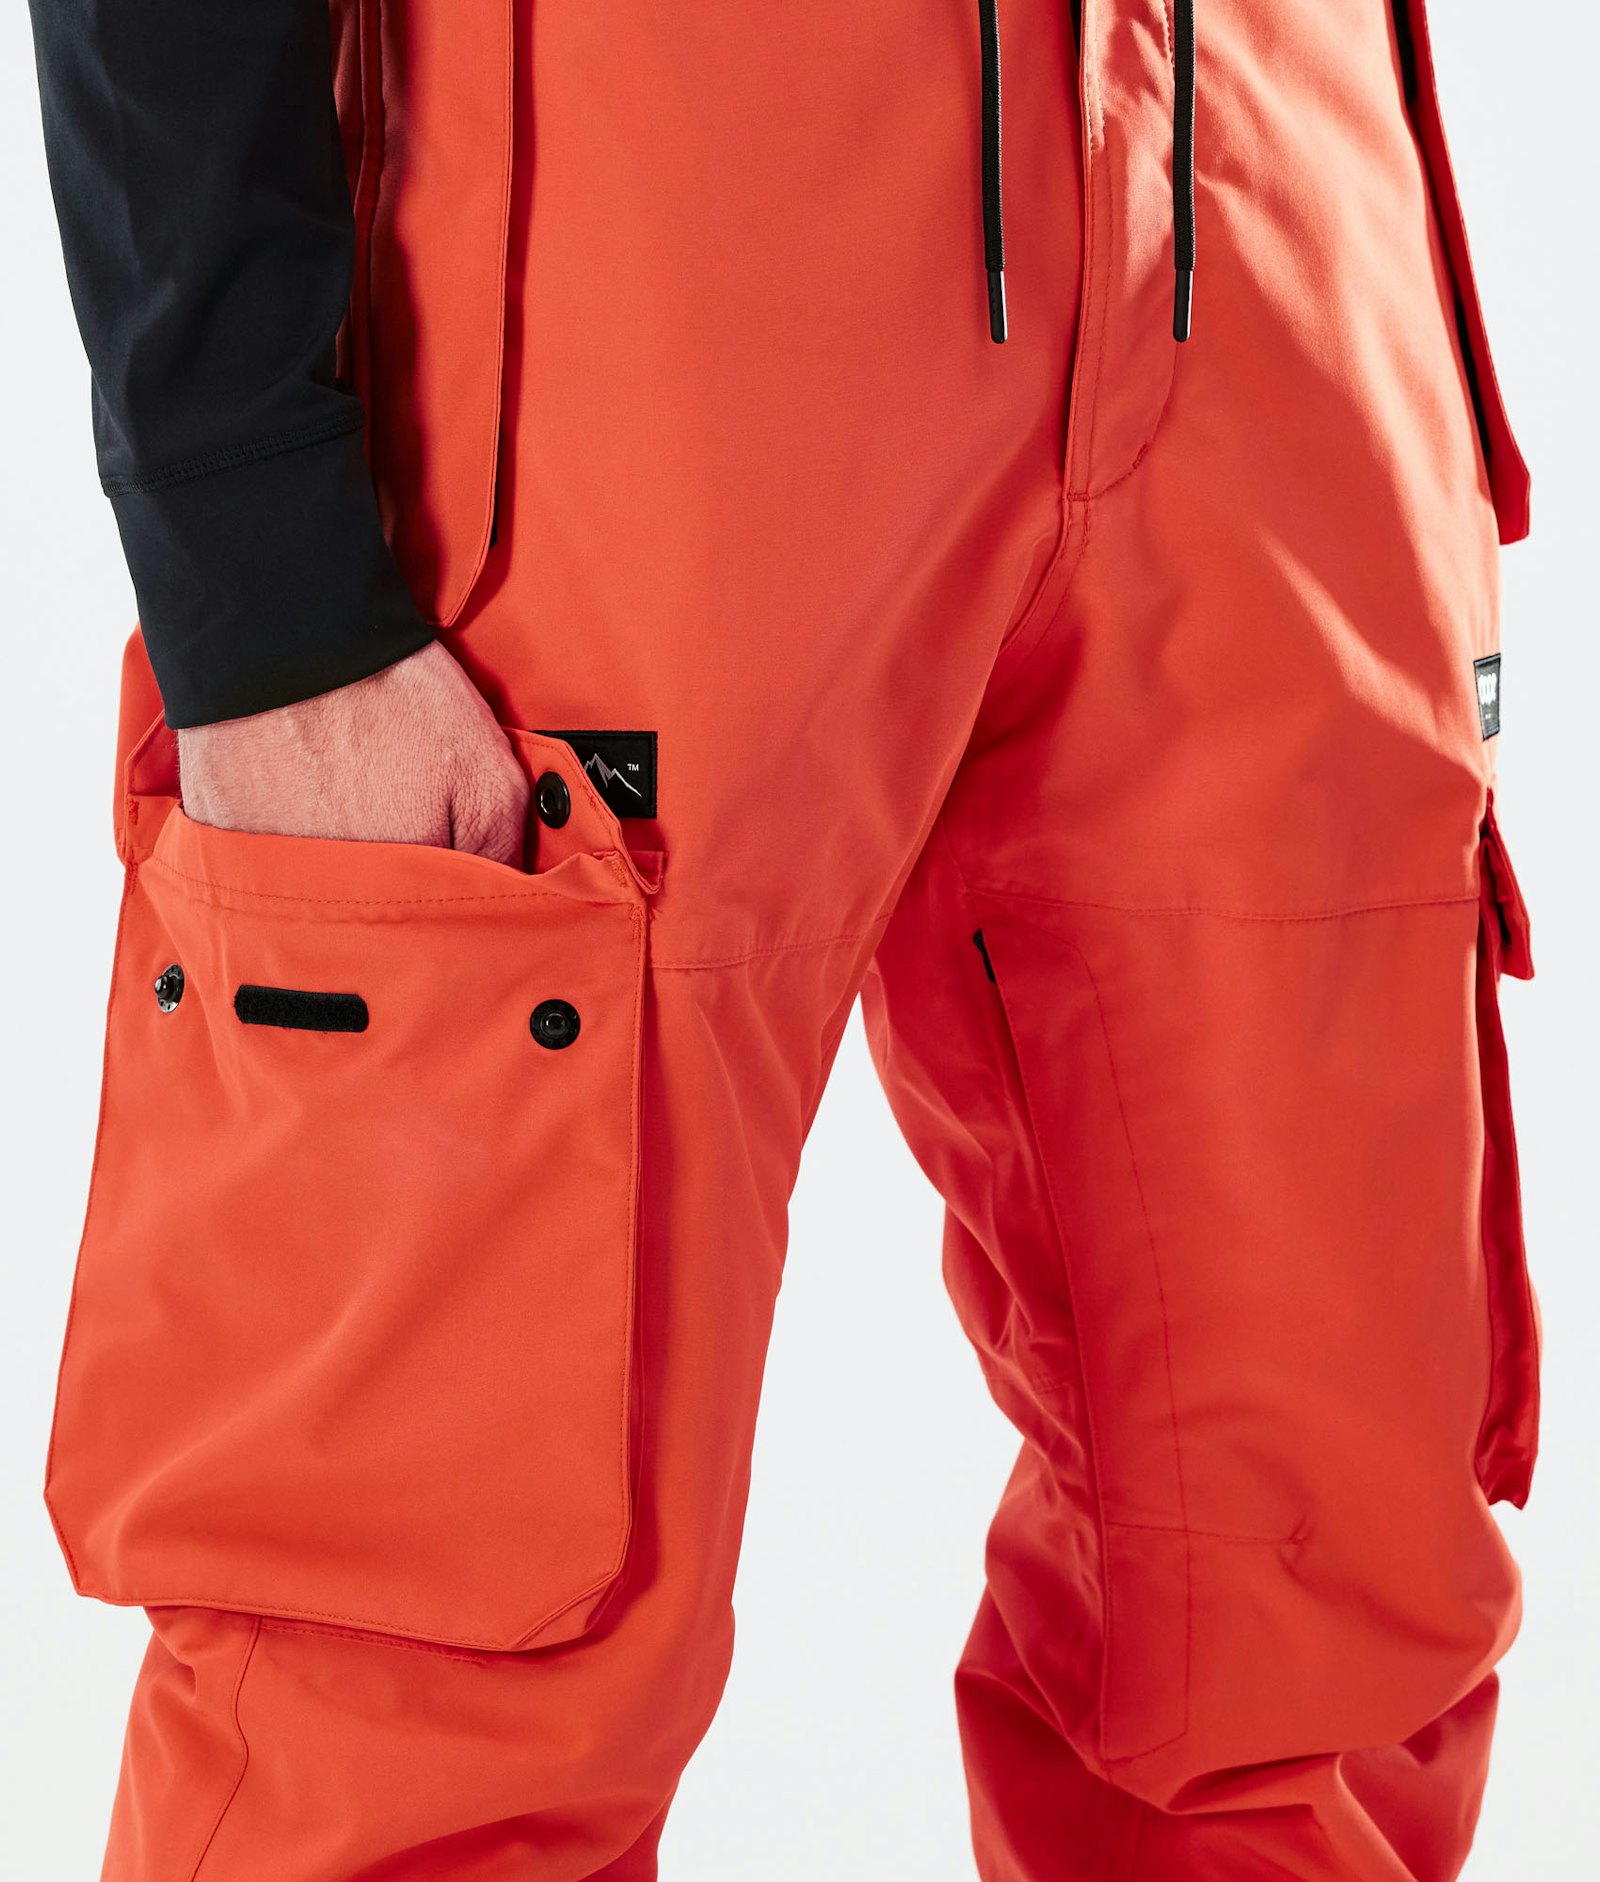 Dope Iconic 2021 Pantalon de Snowboard Homme Orange